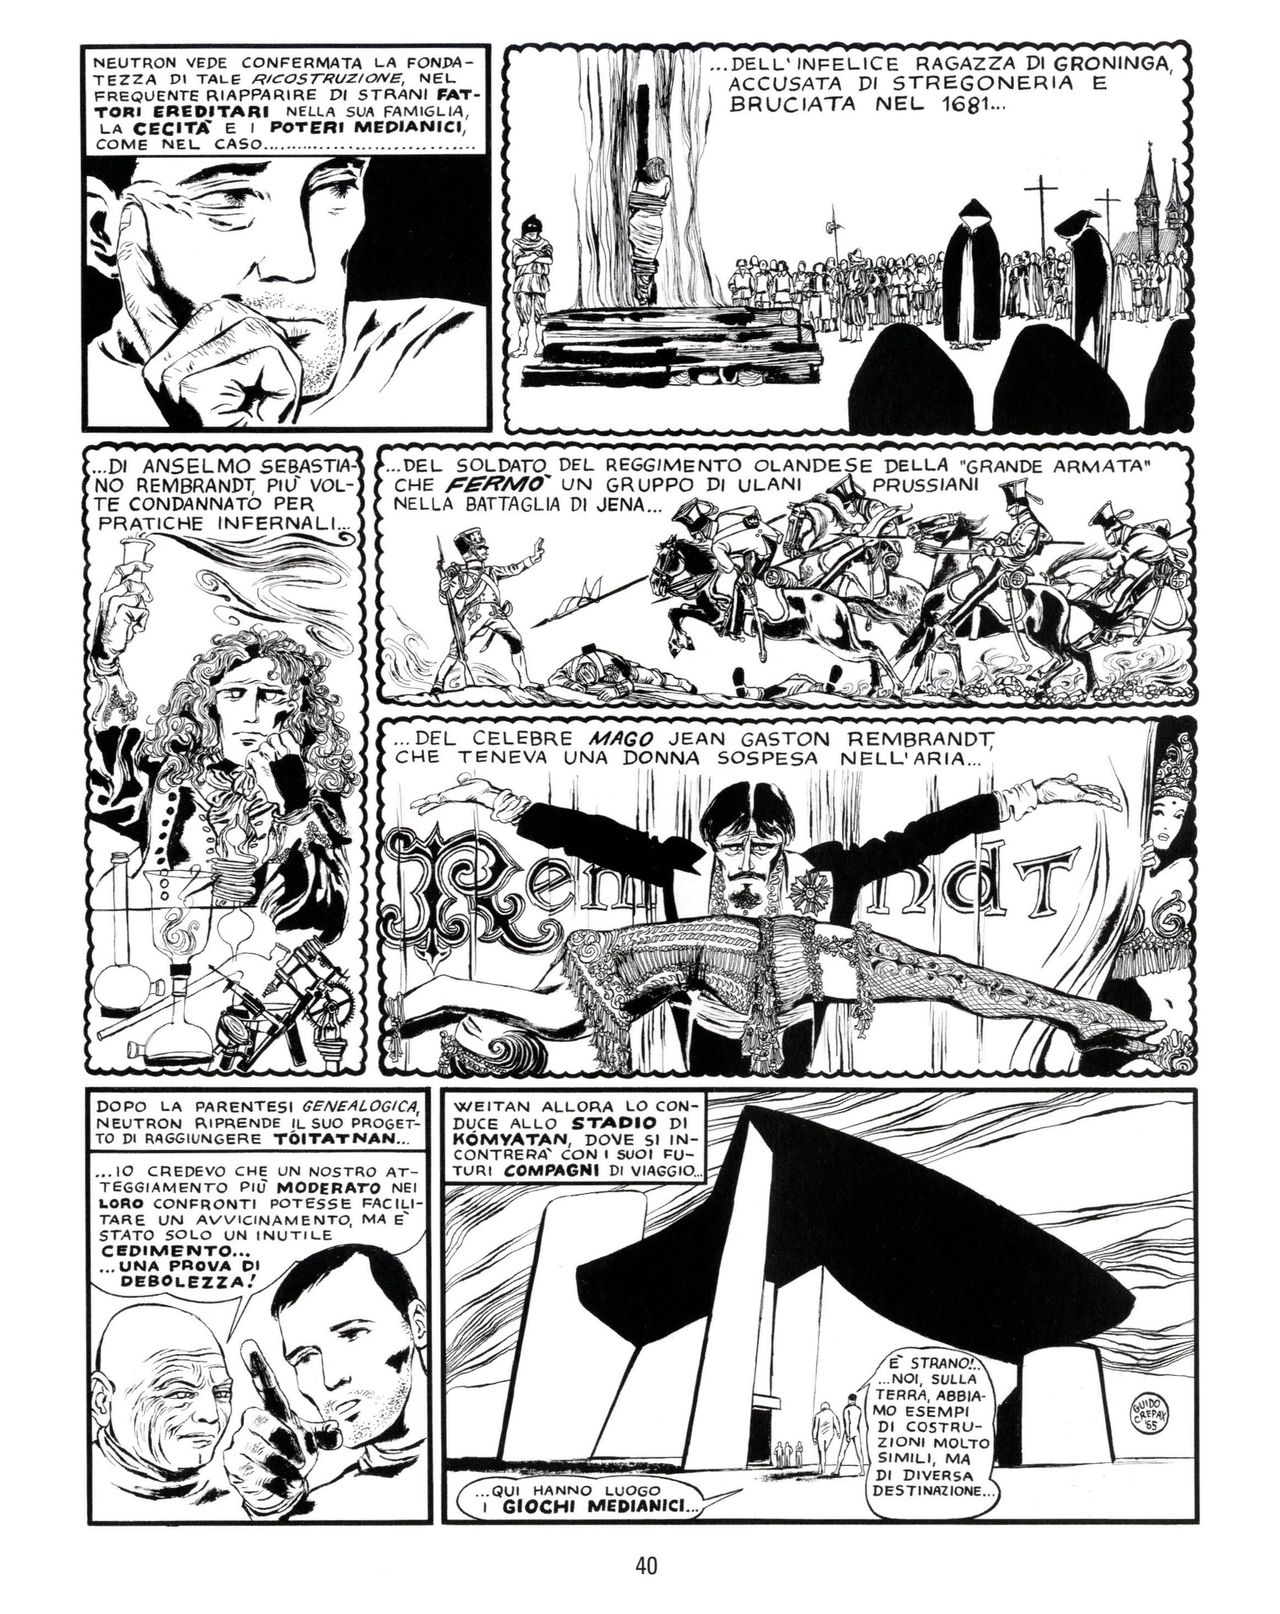 [Guido Crepax] Erotica Fumetti #25 : L'ascesa dei sotterranei : I cavalieri ciechi [Italian] 41